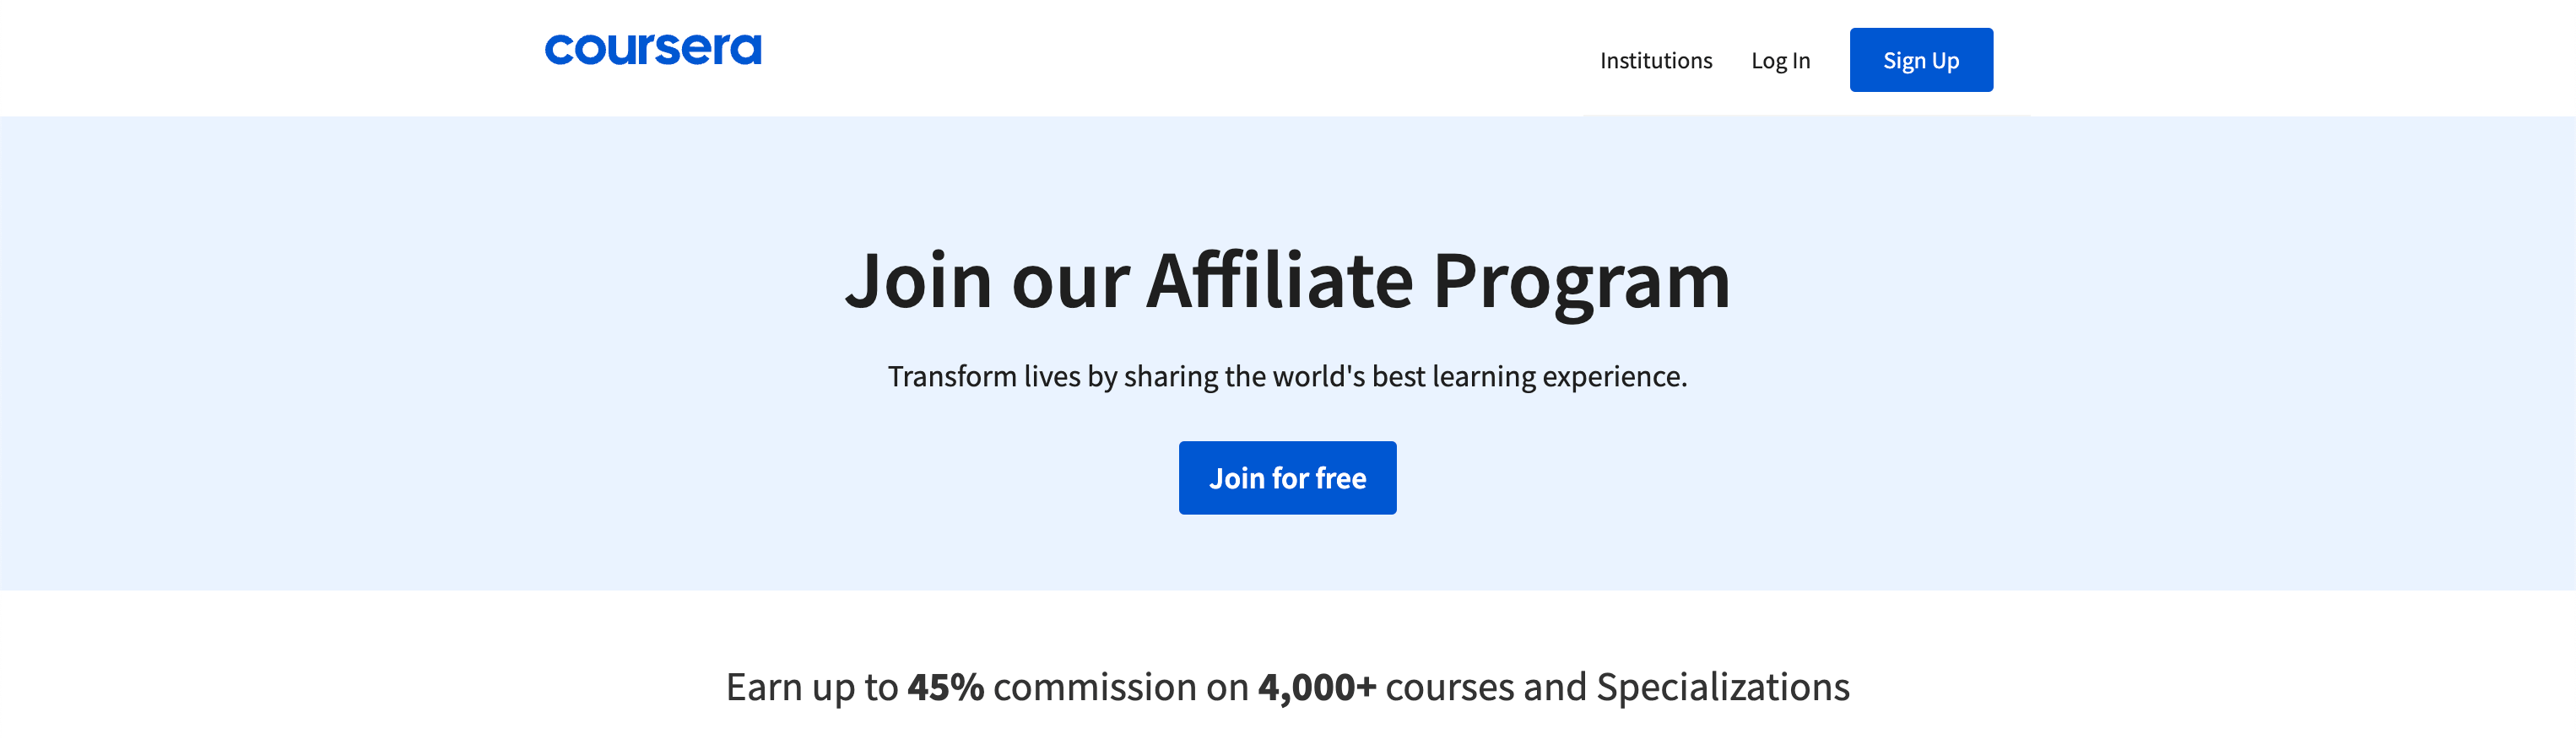 Coursera Affiliate Program's Homepage